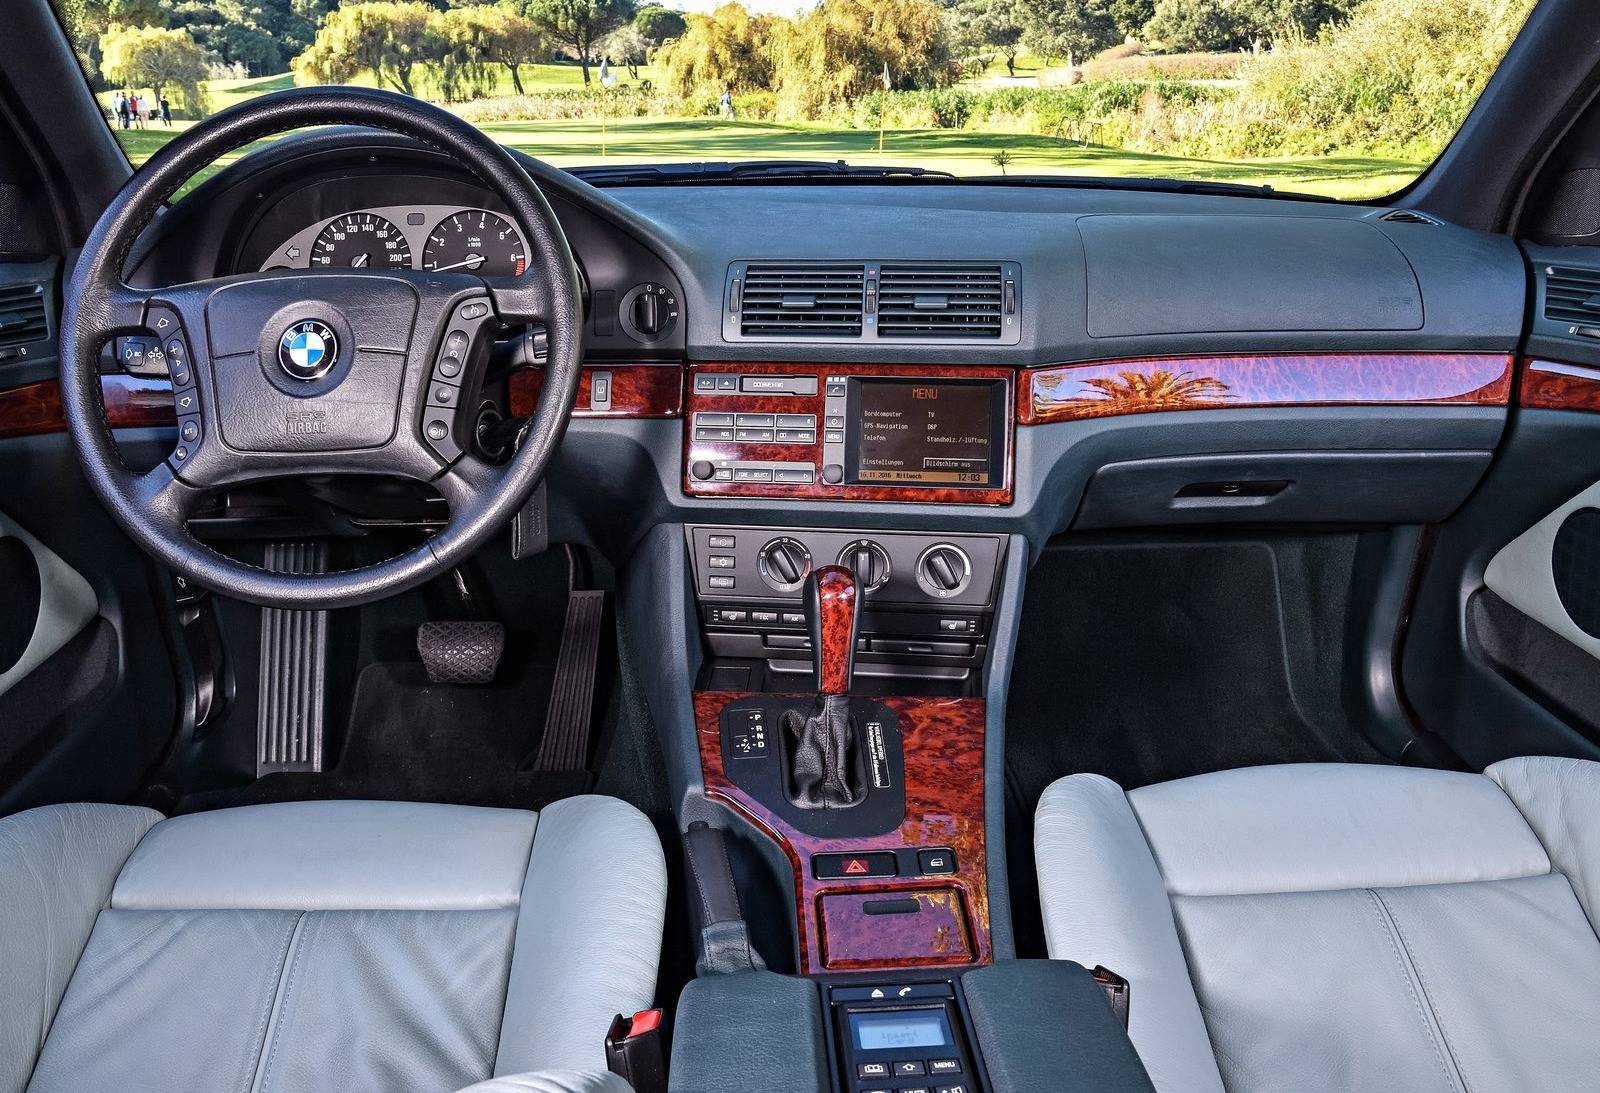 BMW E34 Interieur